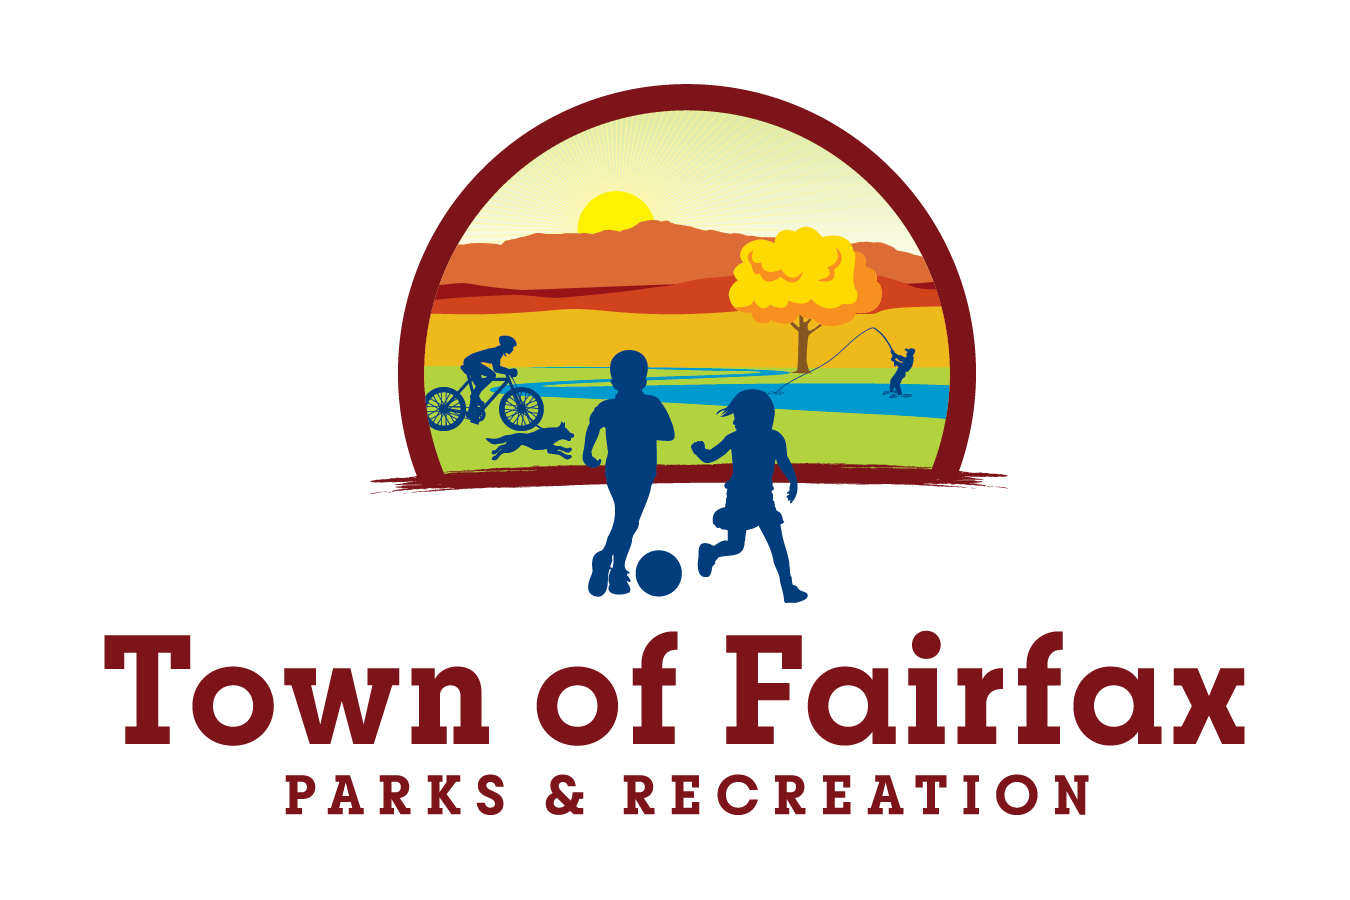 Fairfax Parks & Recreation Department